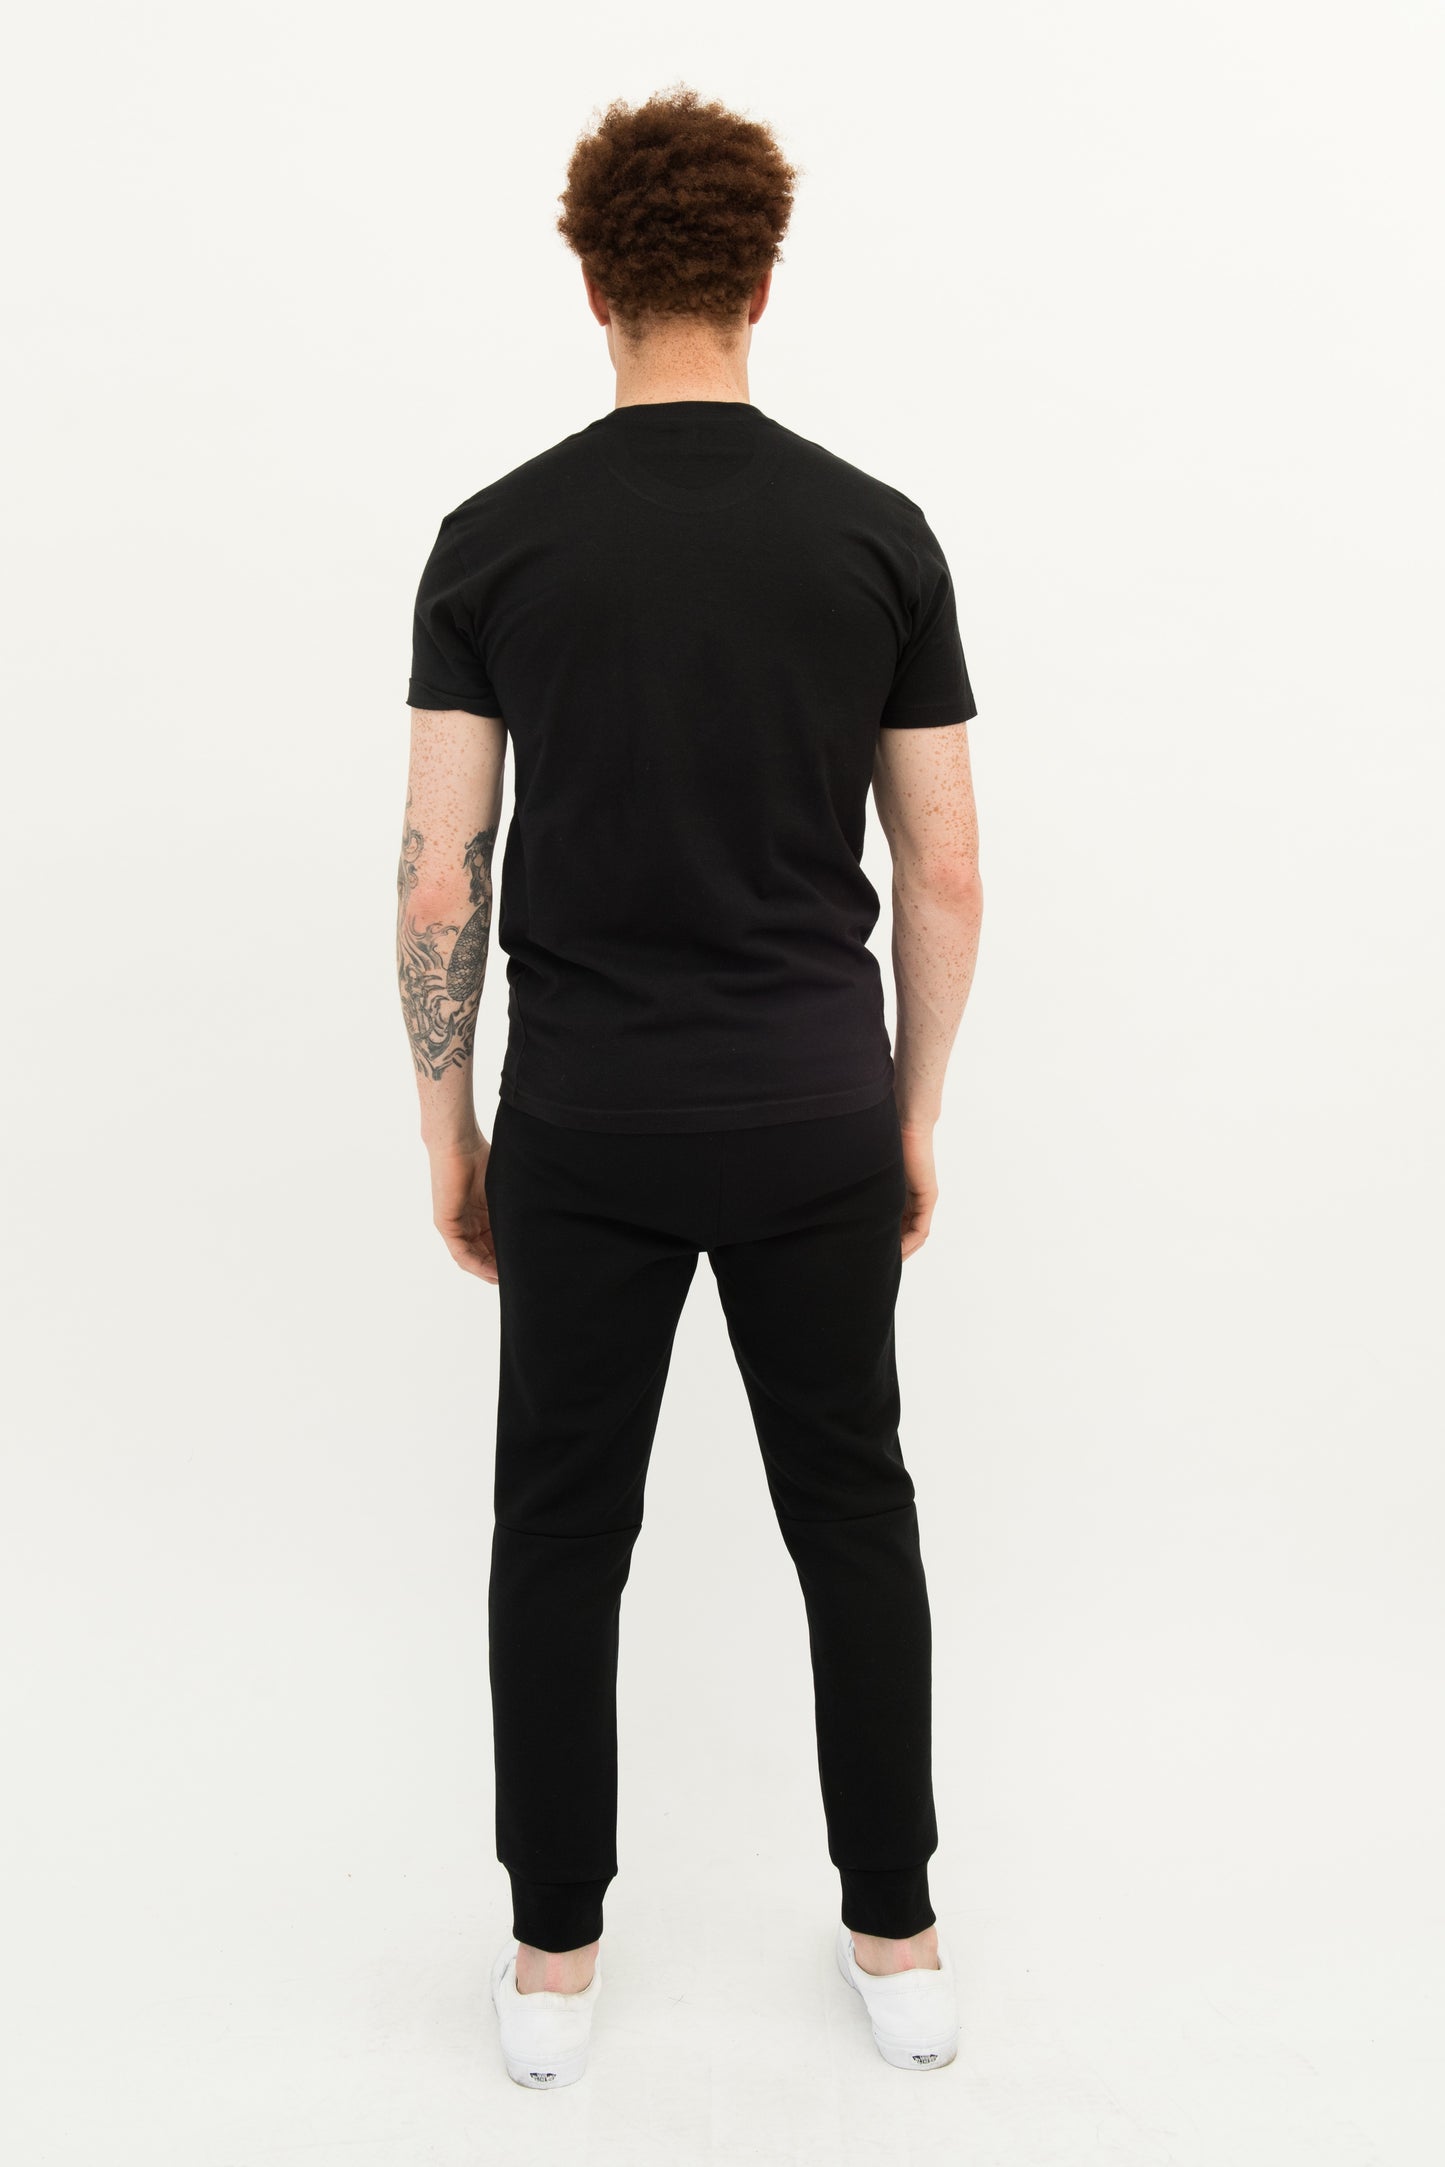 Black owned clothing brand, Men's Black Crewneck Tshirt. 1-800-Petty. Back